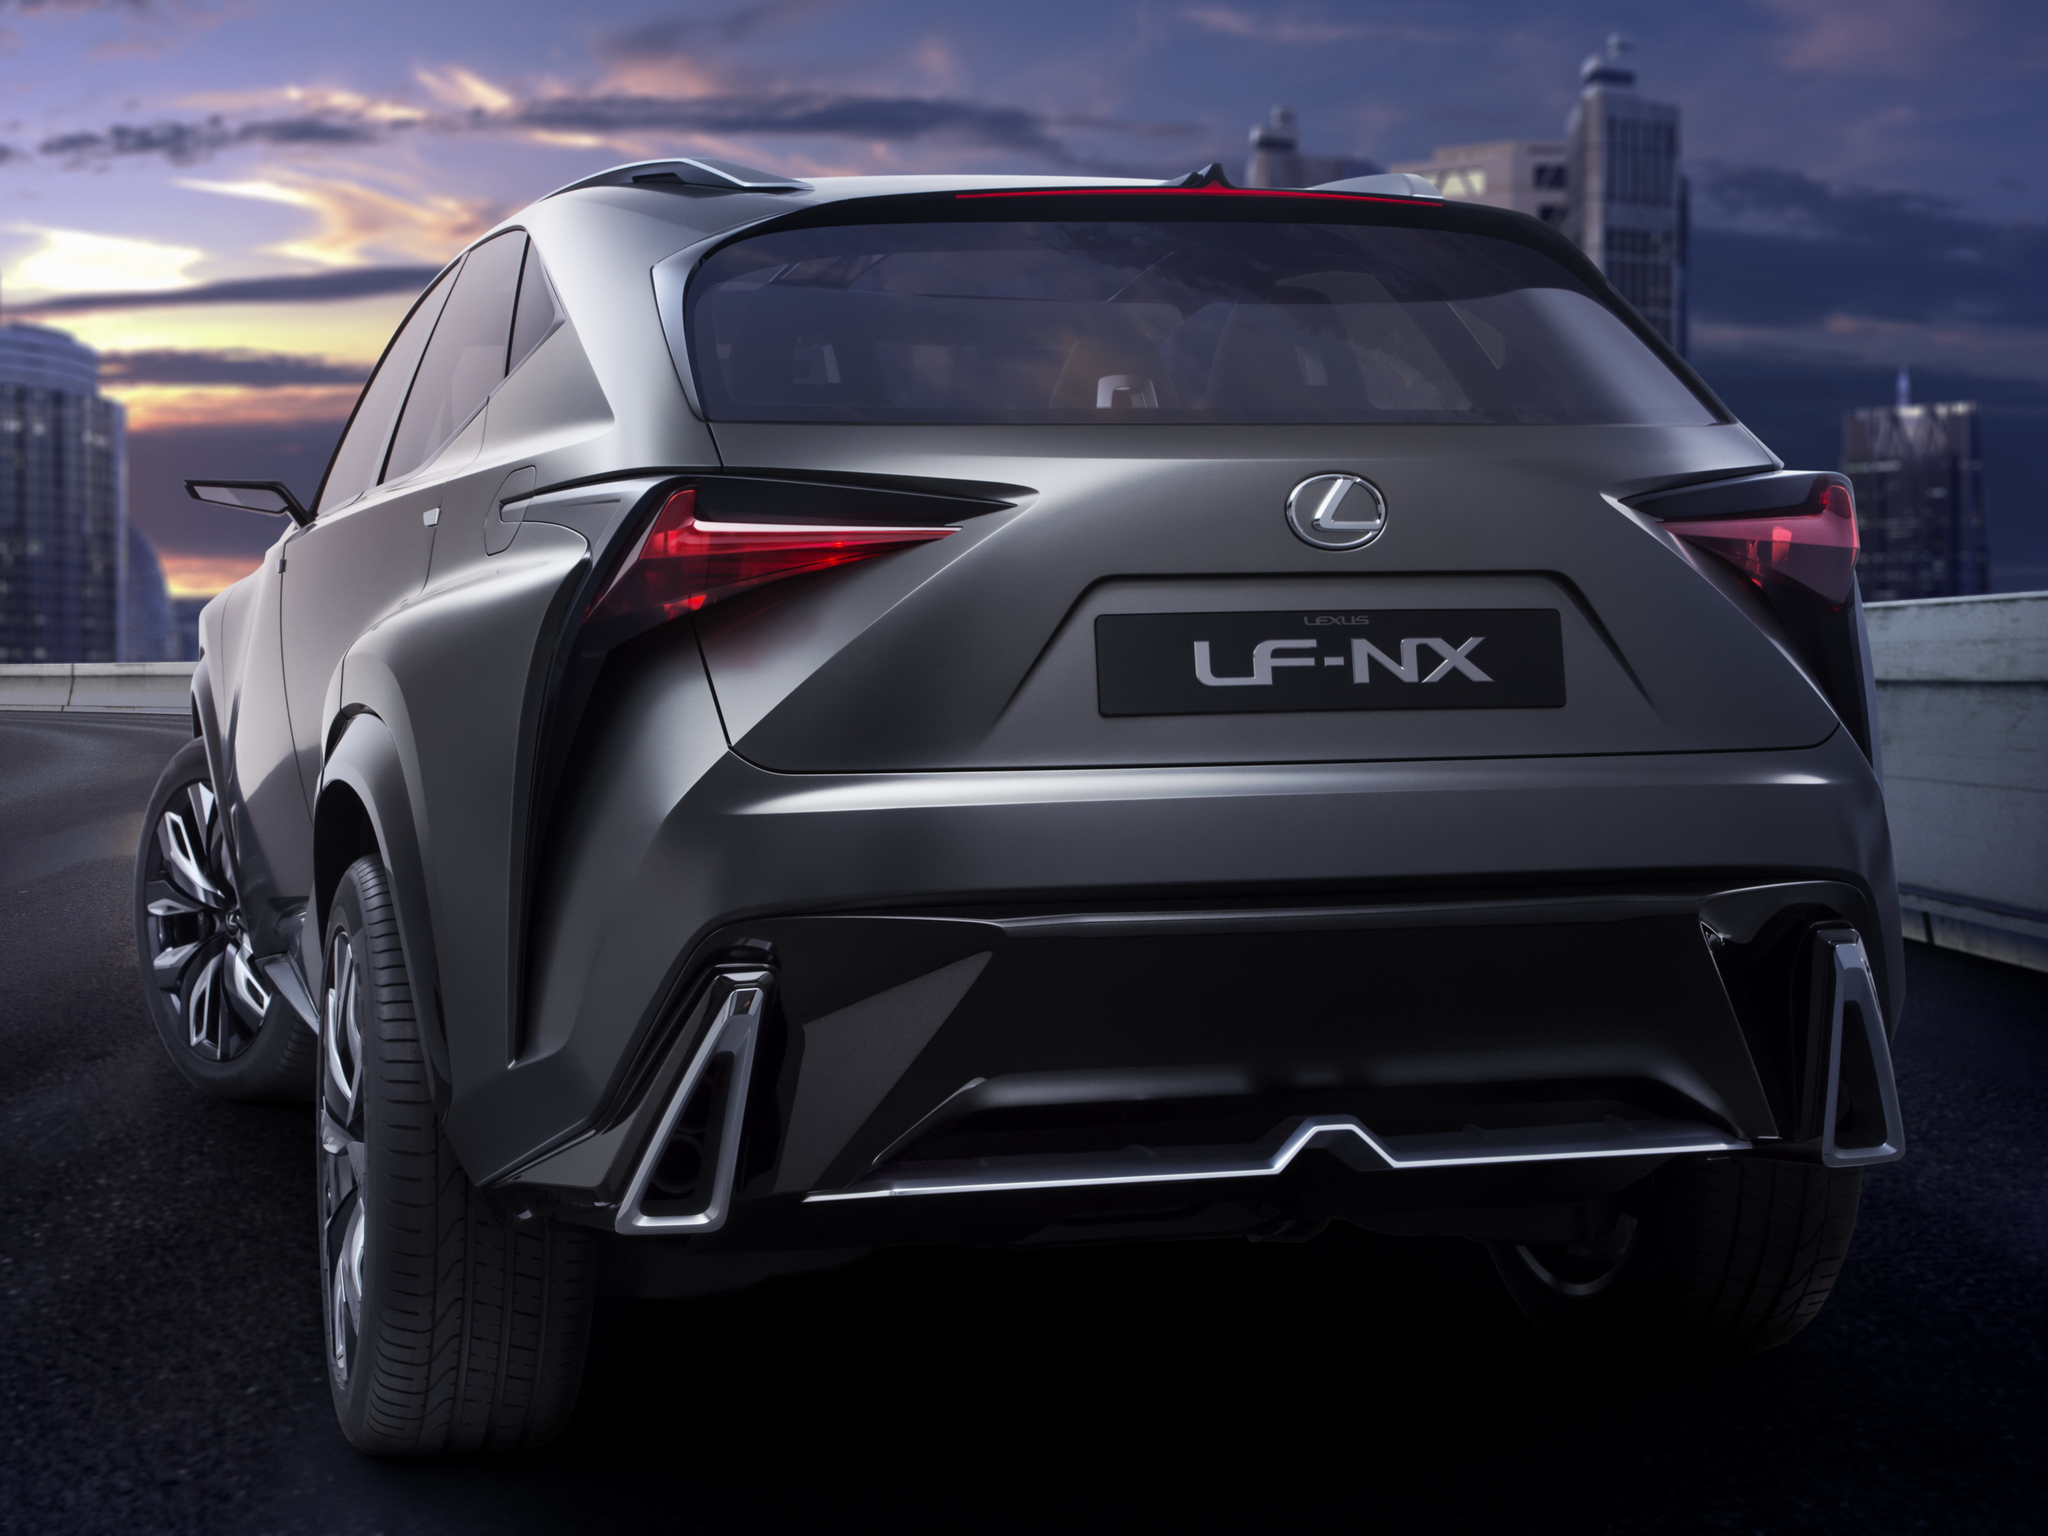 2013, Lexus, Lf nx, Turbo, Concept Wallpaper